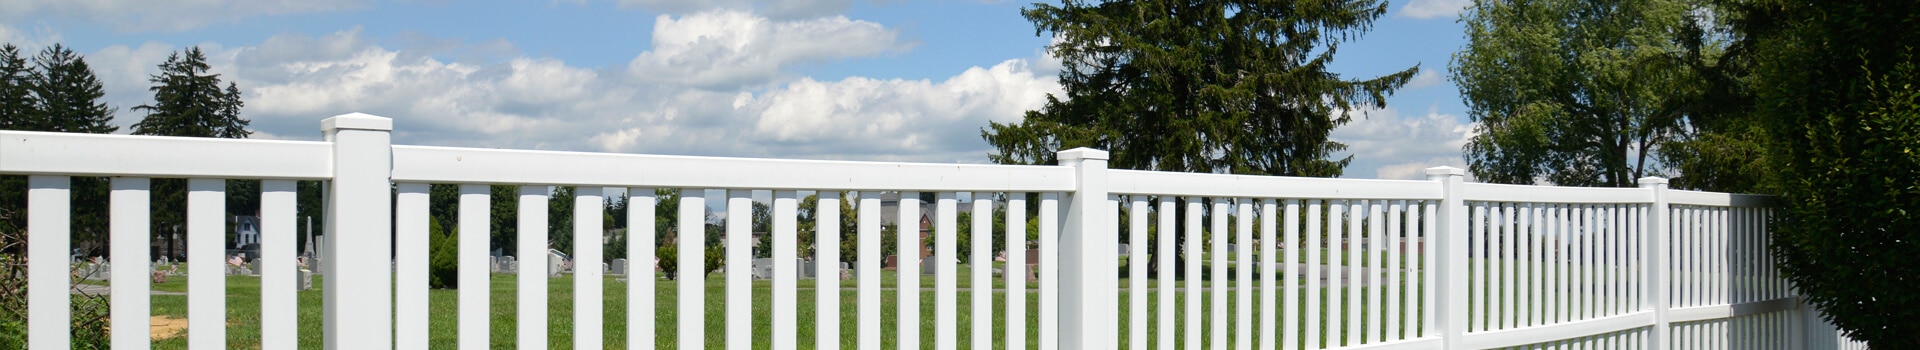 Big Easy Fences - Wooden Fence